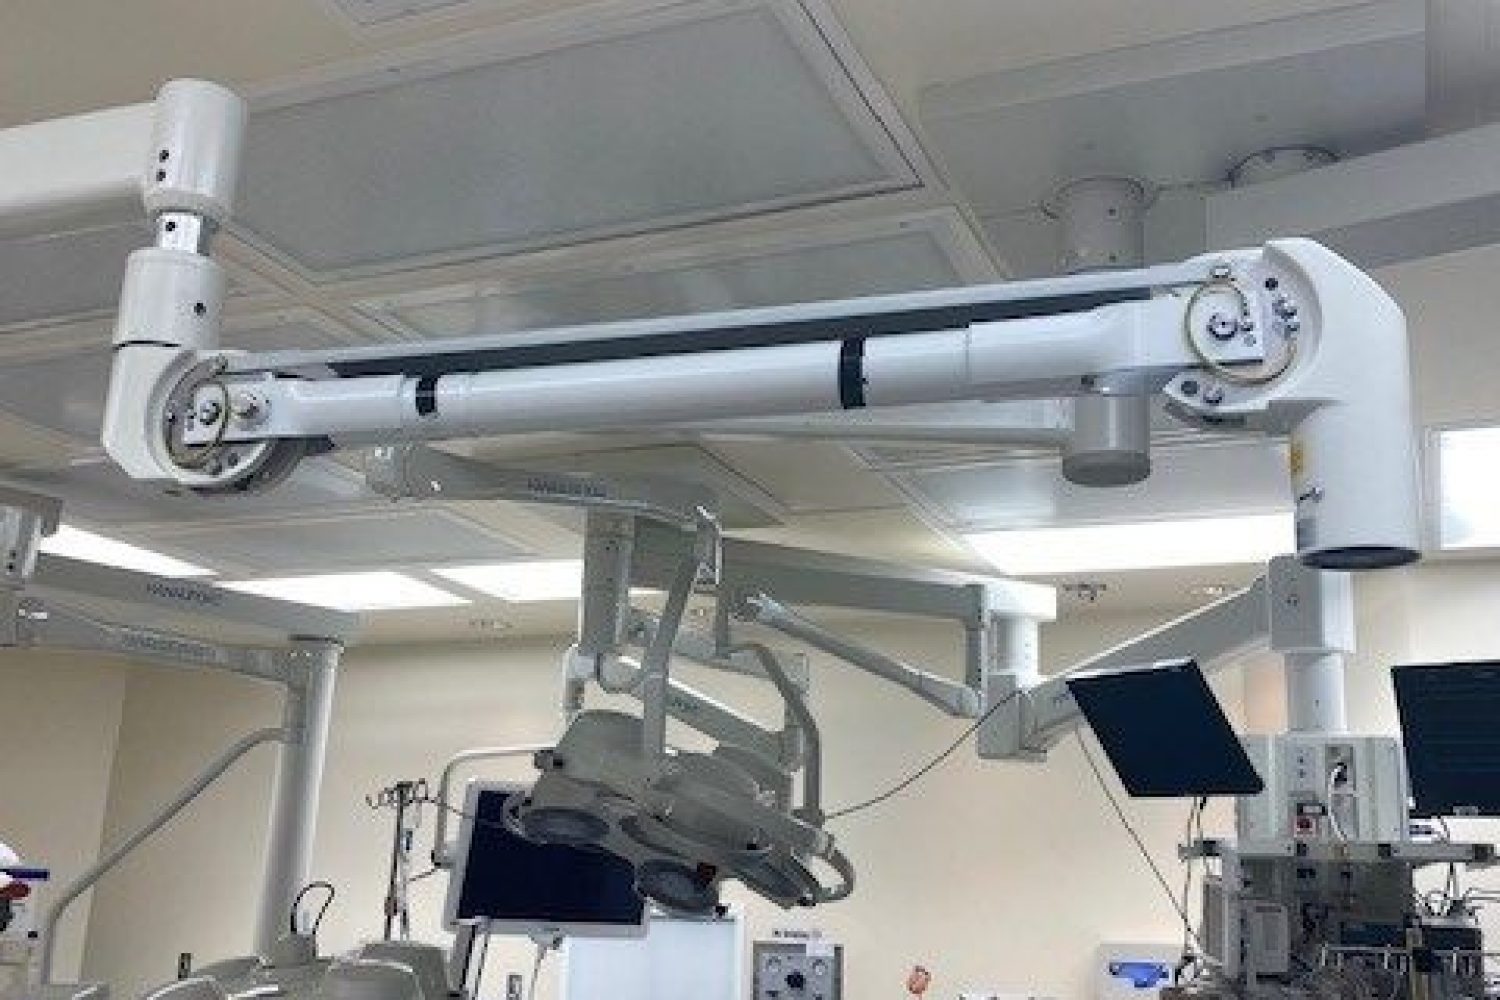 Spring Arm Replacement at Vanderbilt University Medical Center